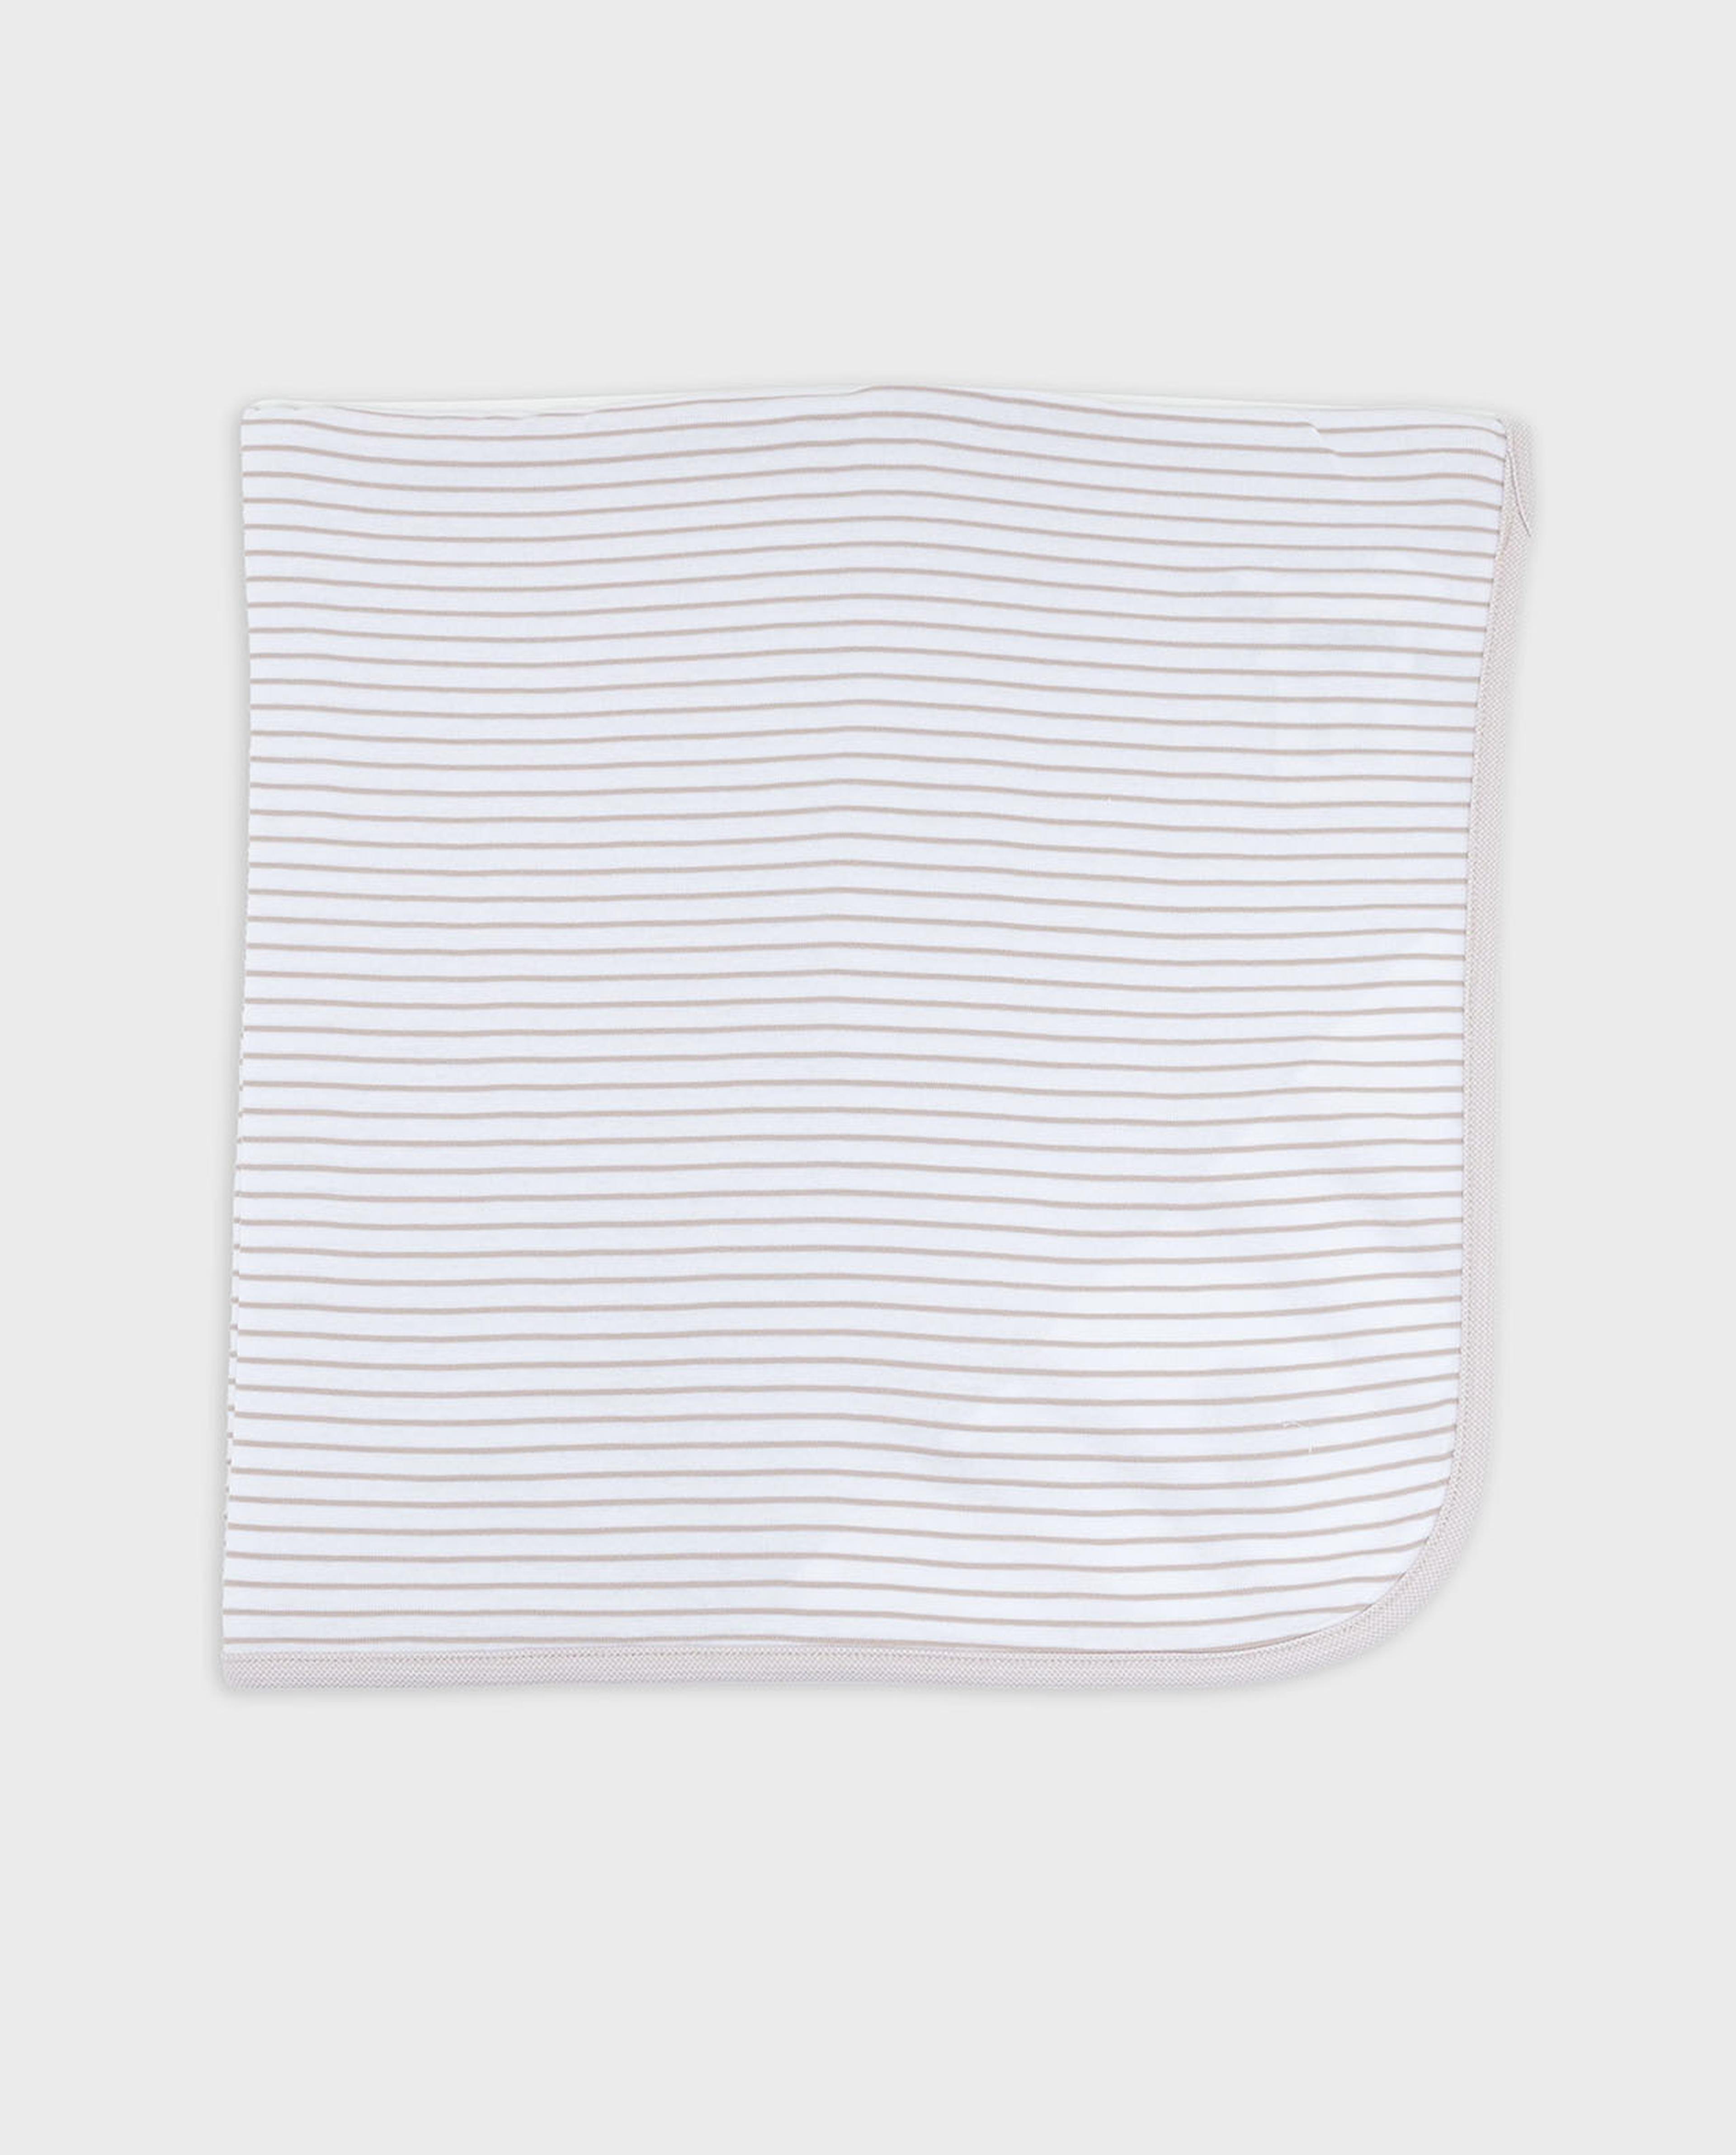 Newborn Striped Blanket/Wrap